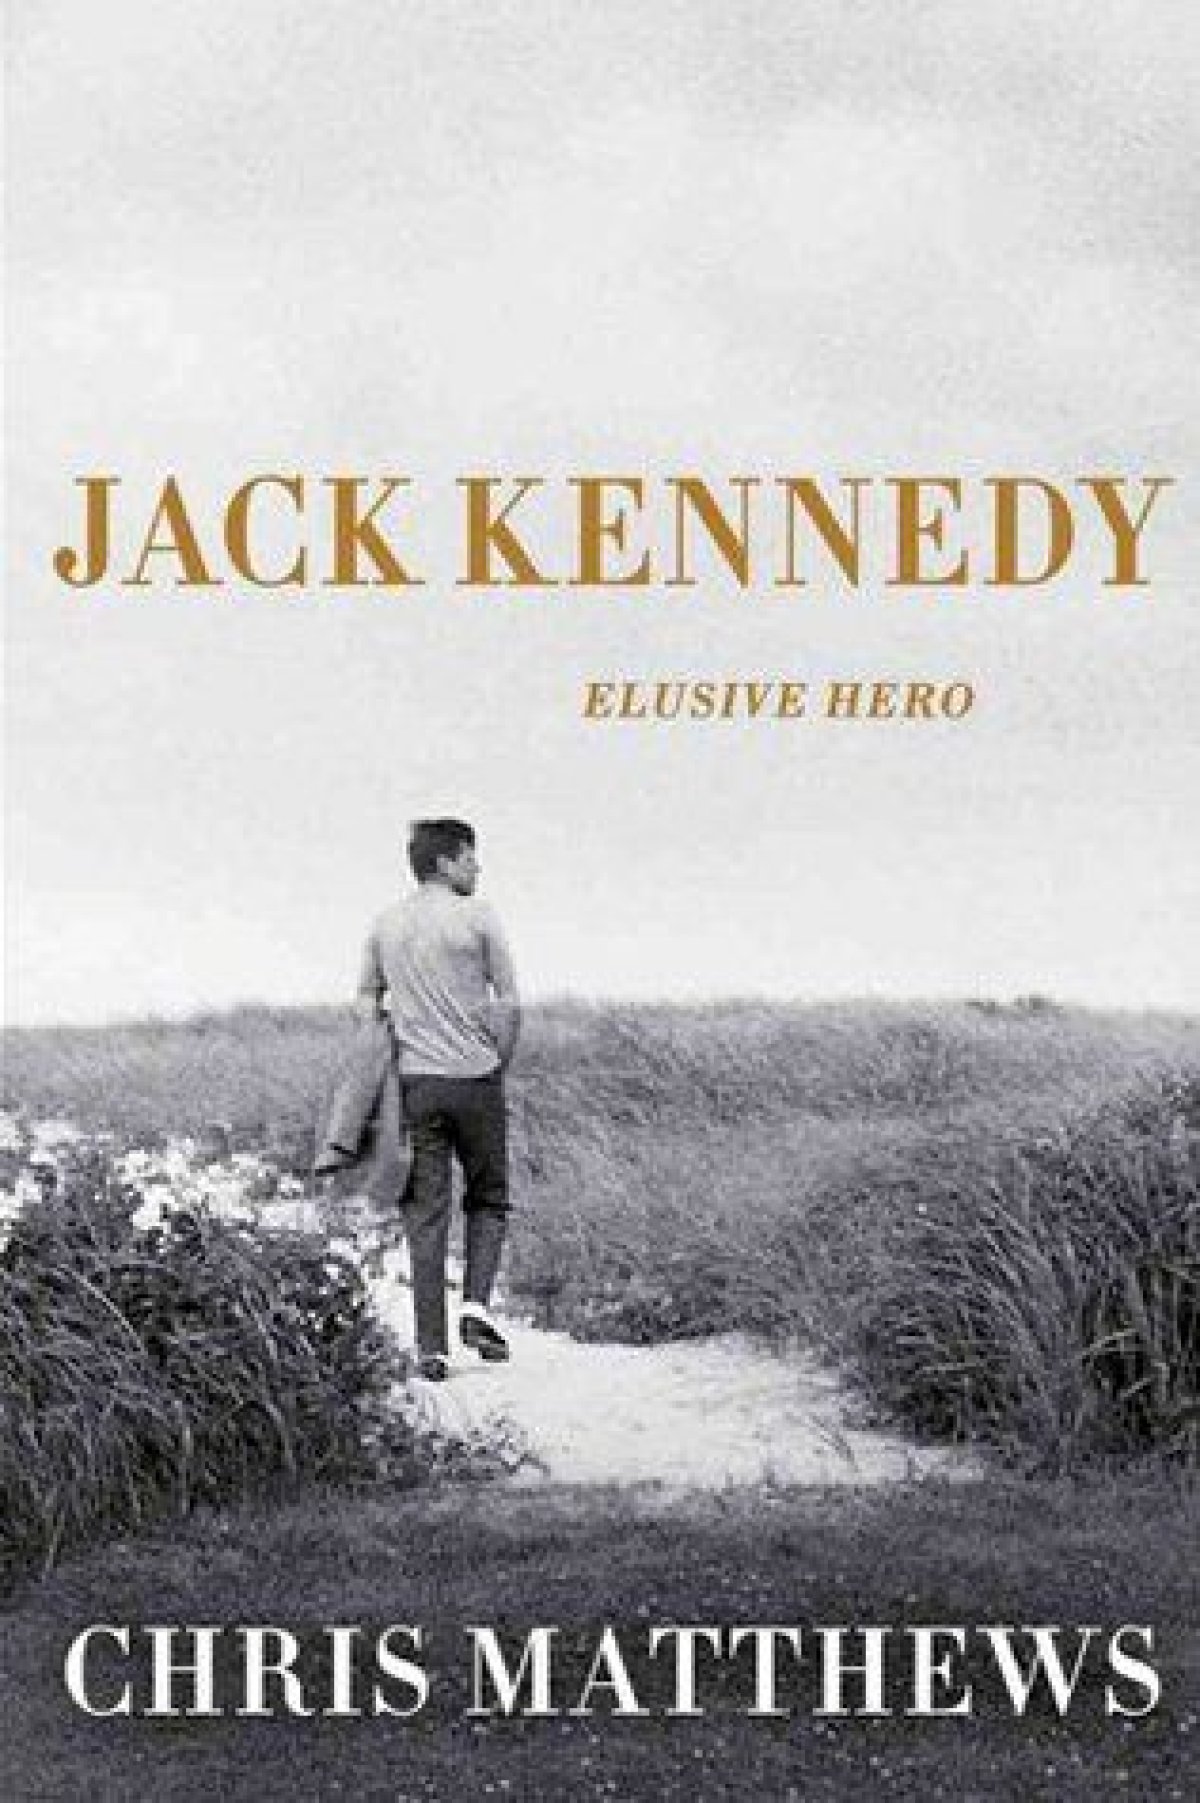 chris matthews book: Jack Kennedy: Elusive Hero